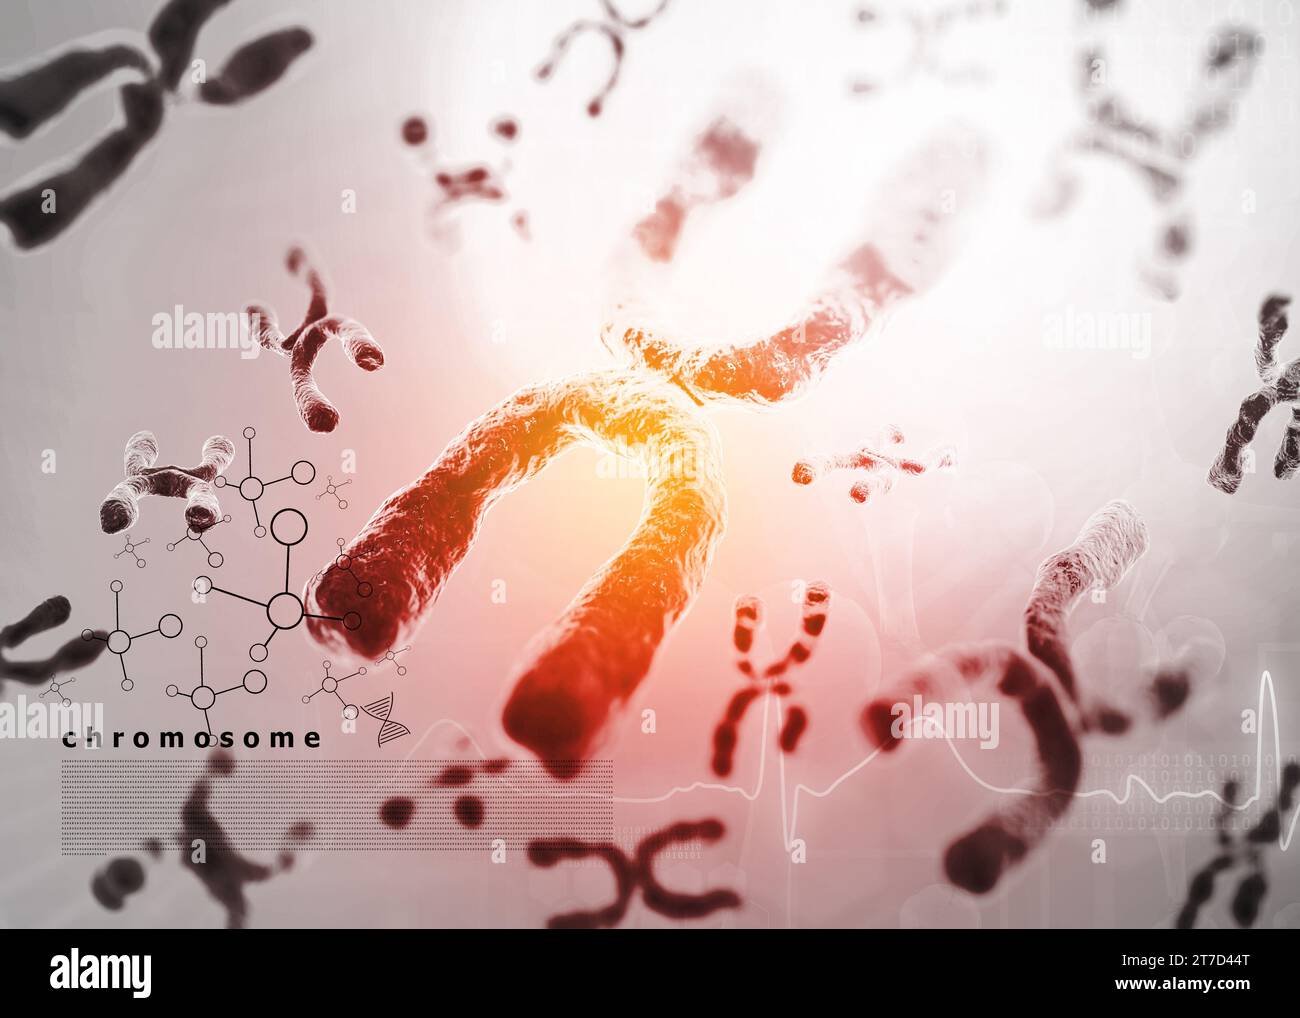 XY chromosomes background. 3d illustration Stock Photo